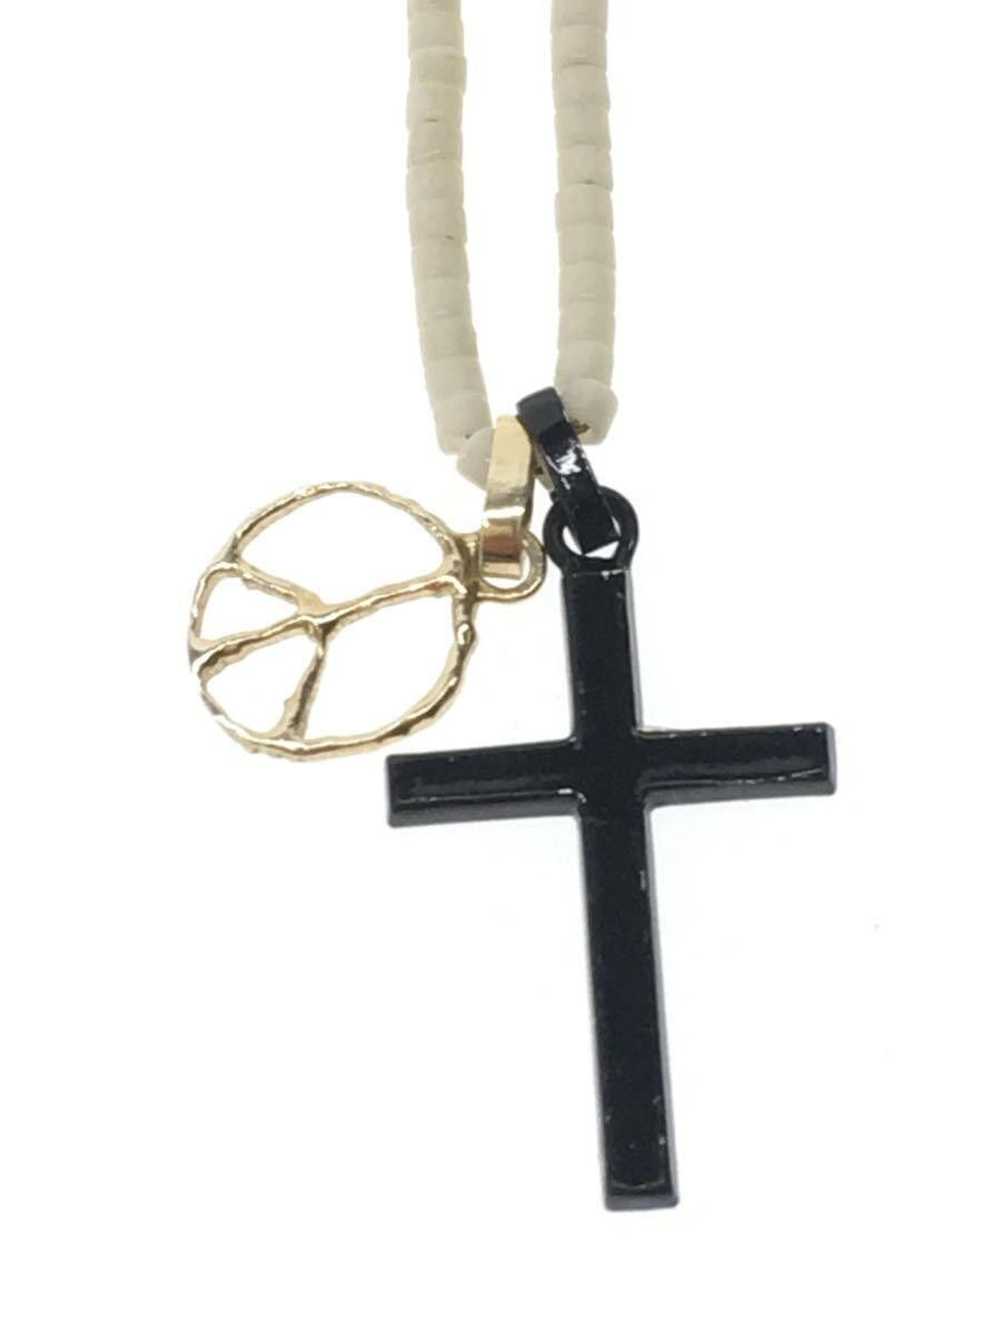 Undercover Patti Smith Cross Peace Bead Necklace - image 2